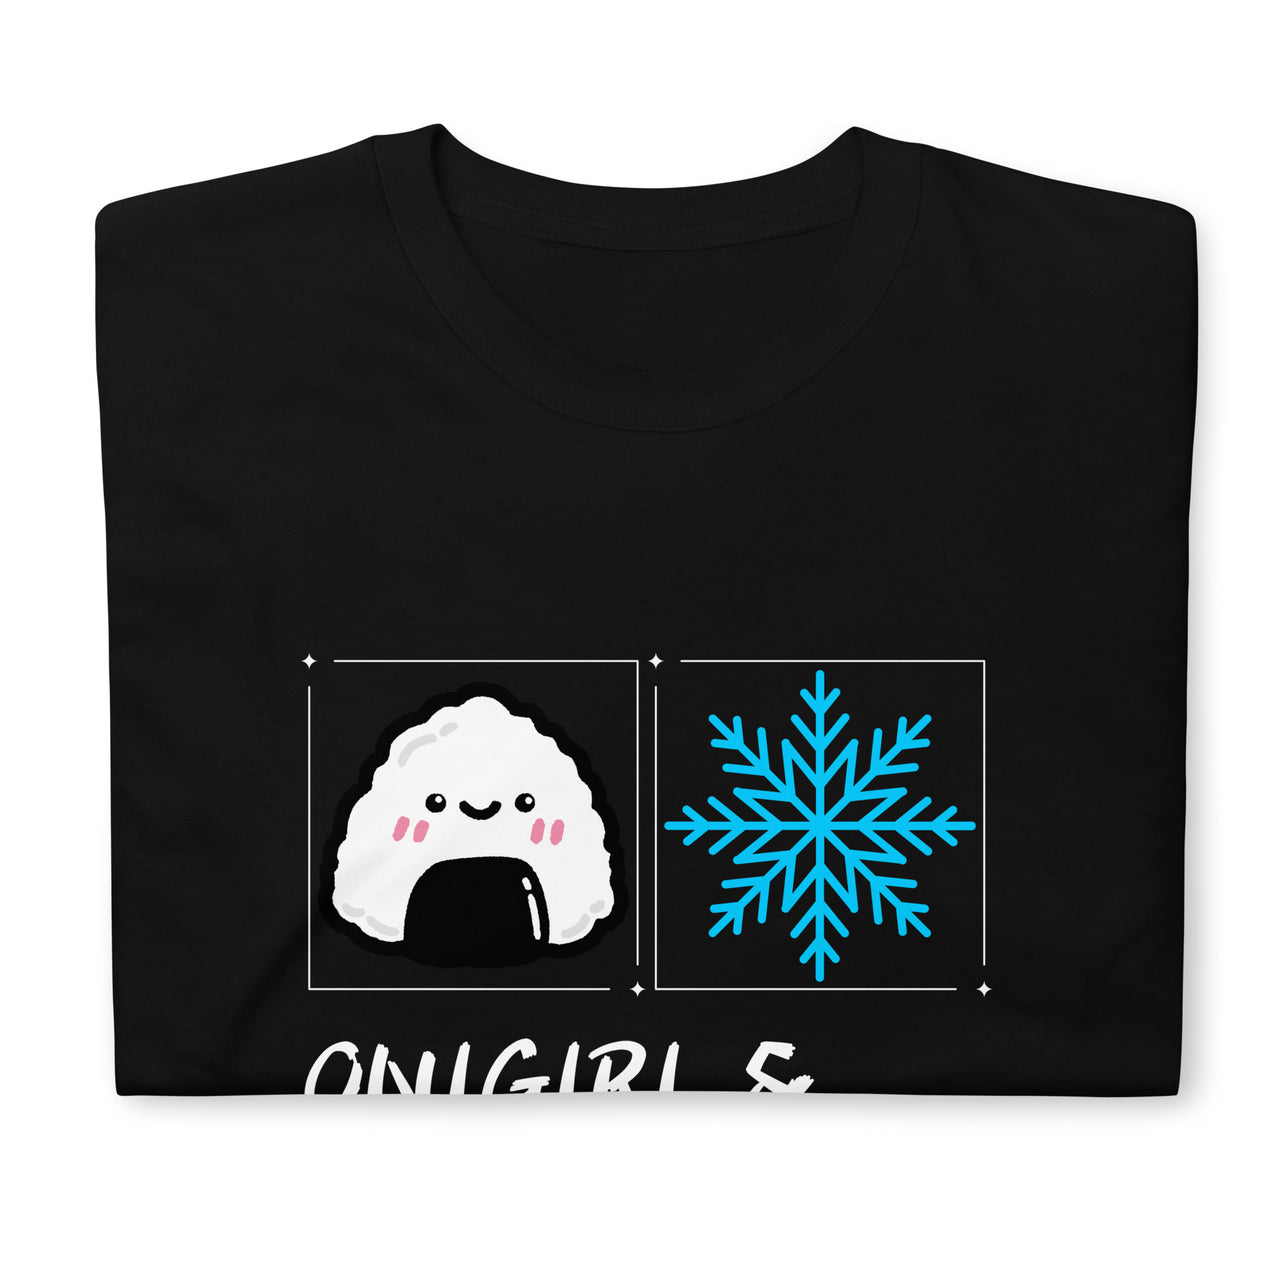 Onigiri and Snowflakes T-Shirt